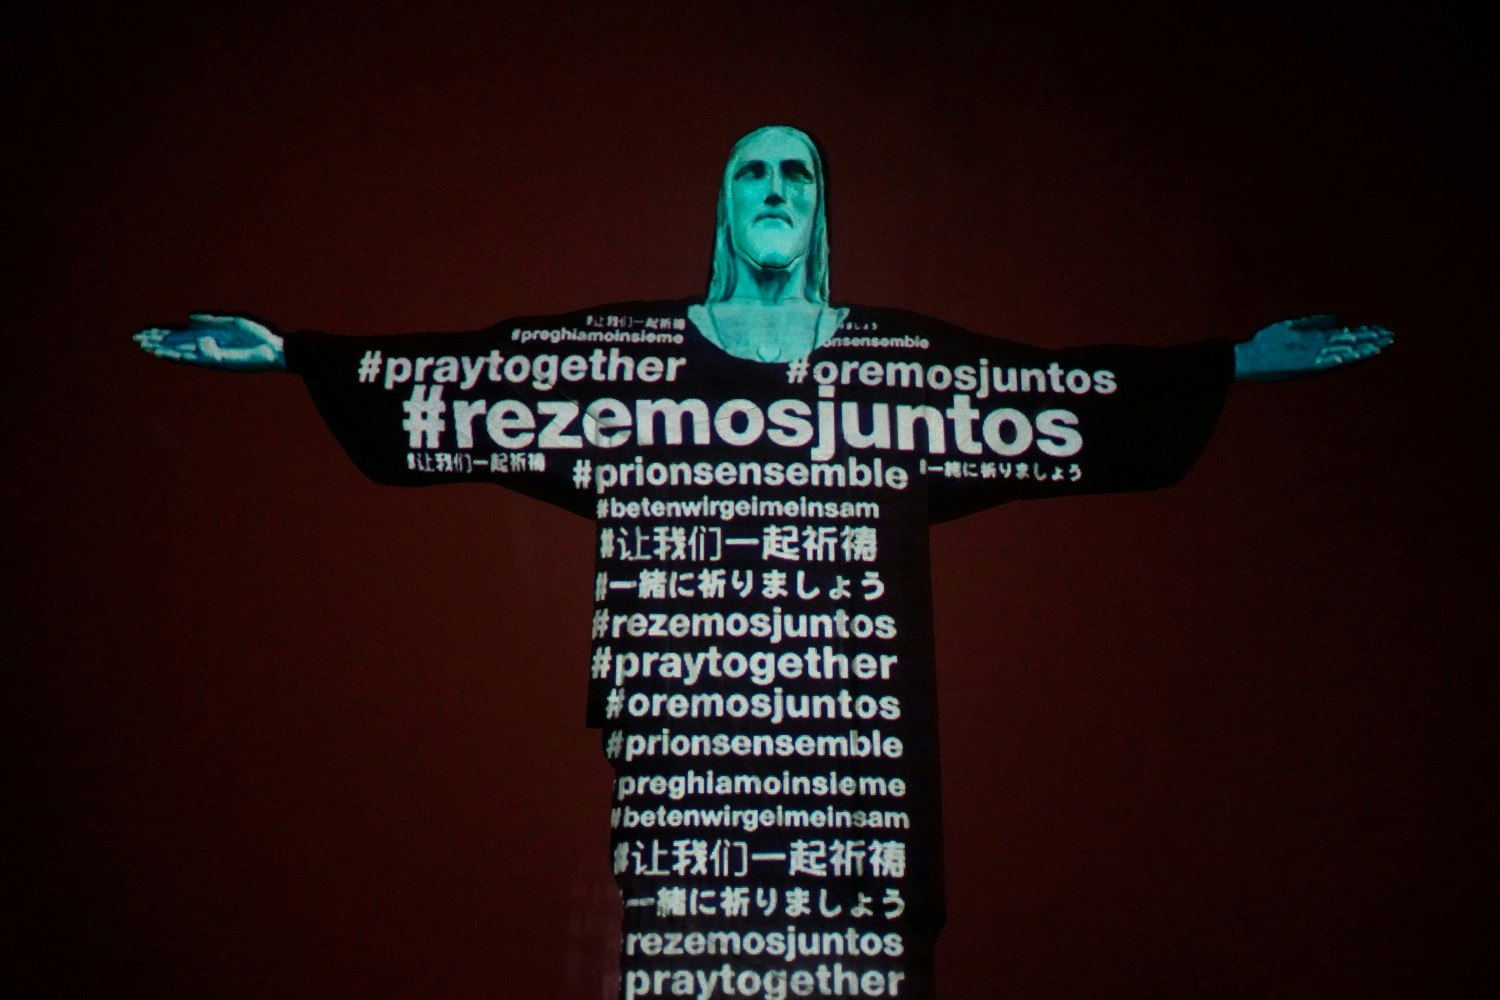 The illuminated statue of Christ the Redeemer in Rio de Janeiro